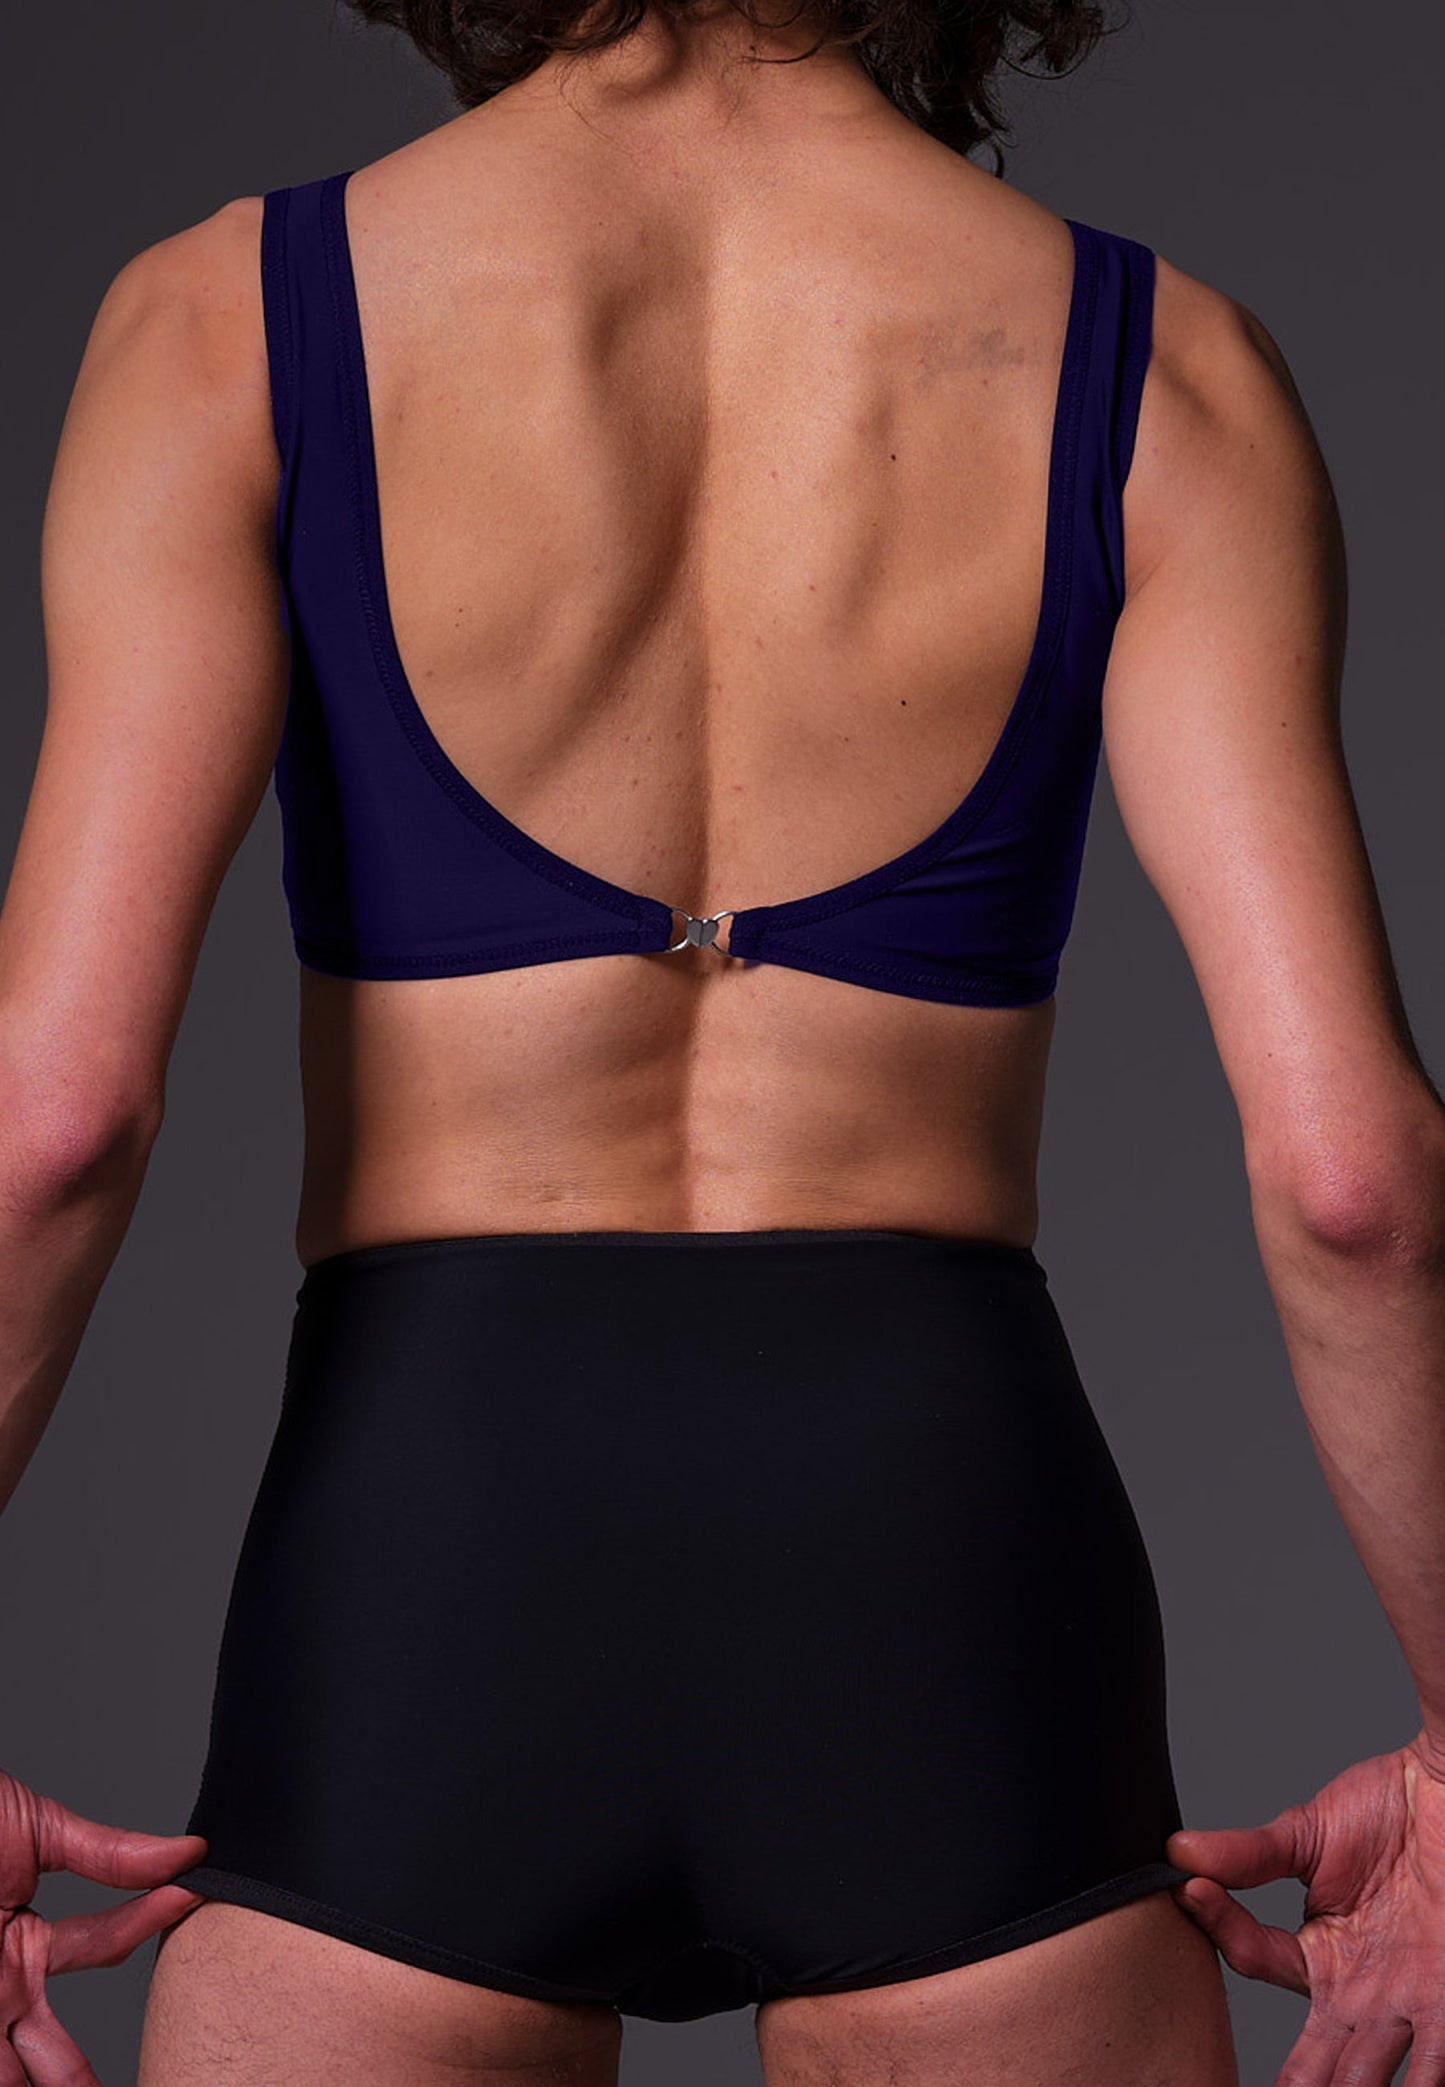 Bikinitop dark blue, seen from the back when worn by model Riah